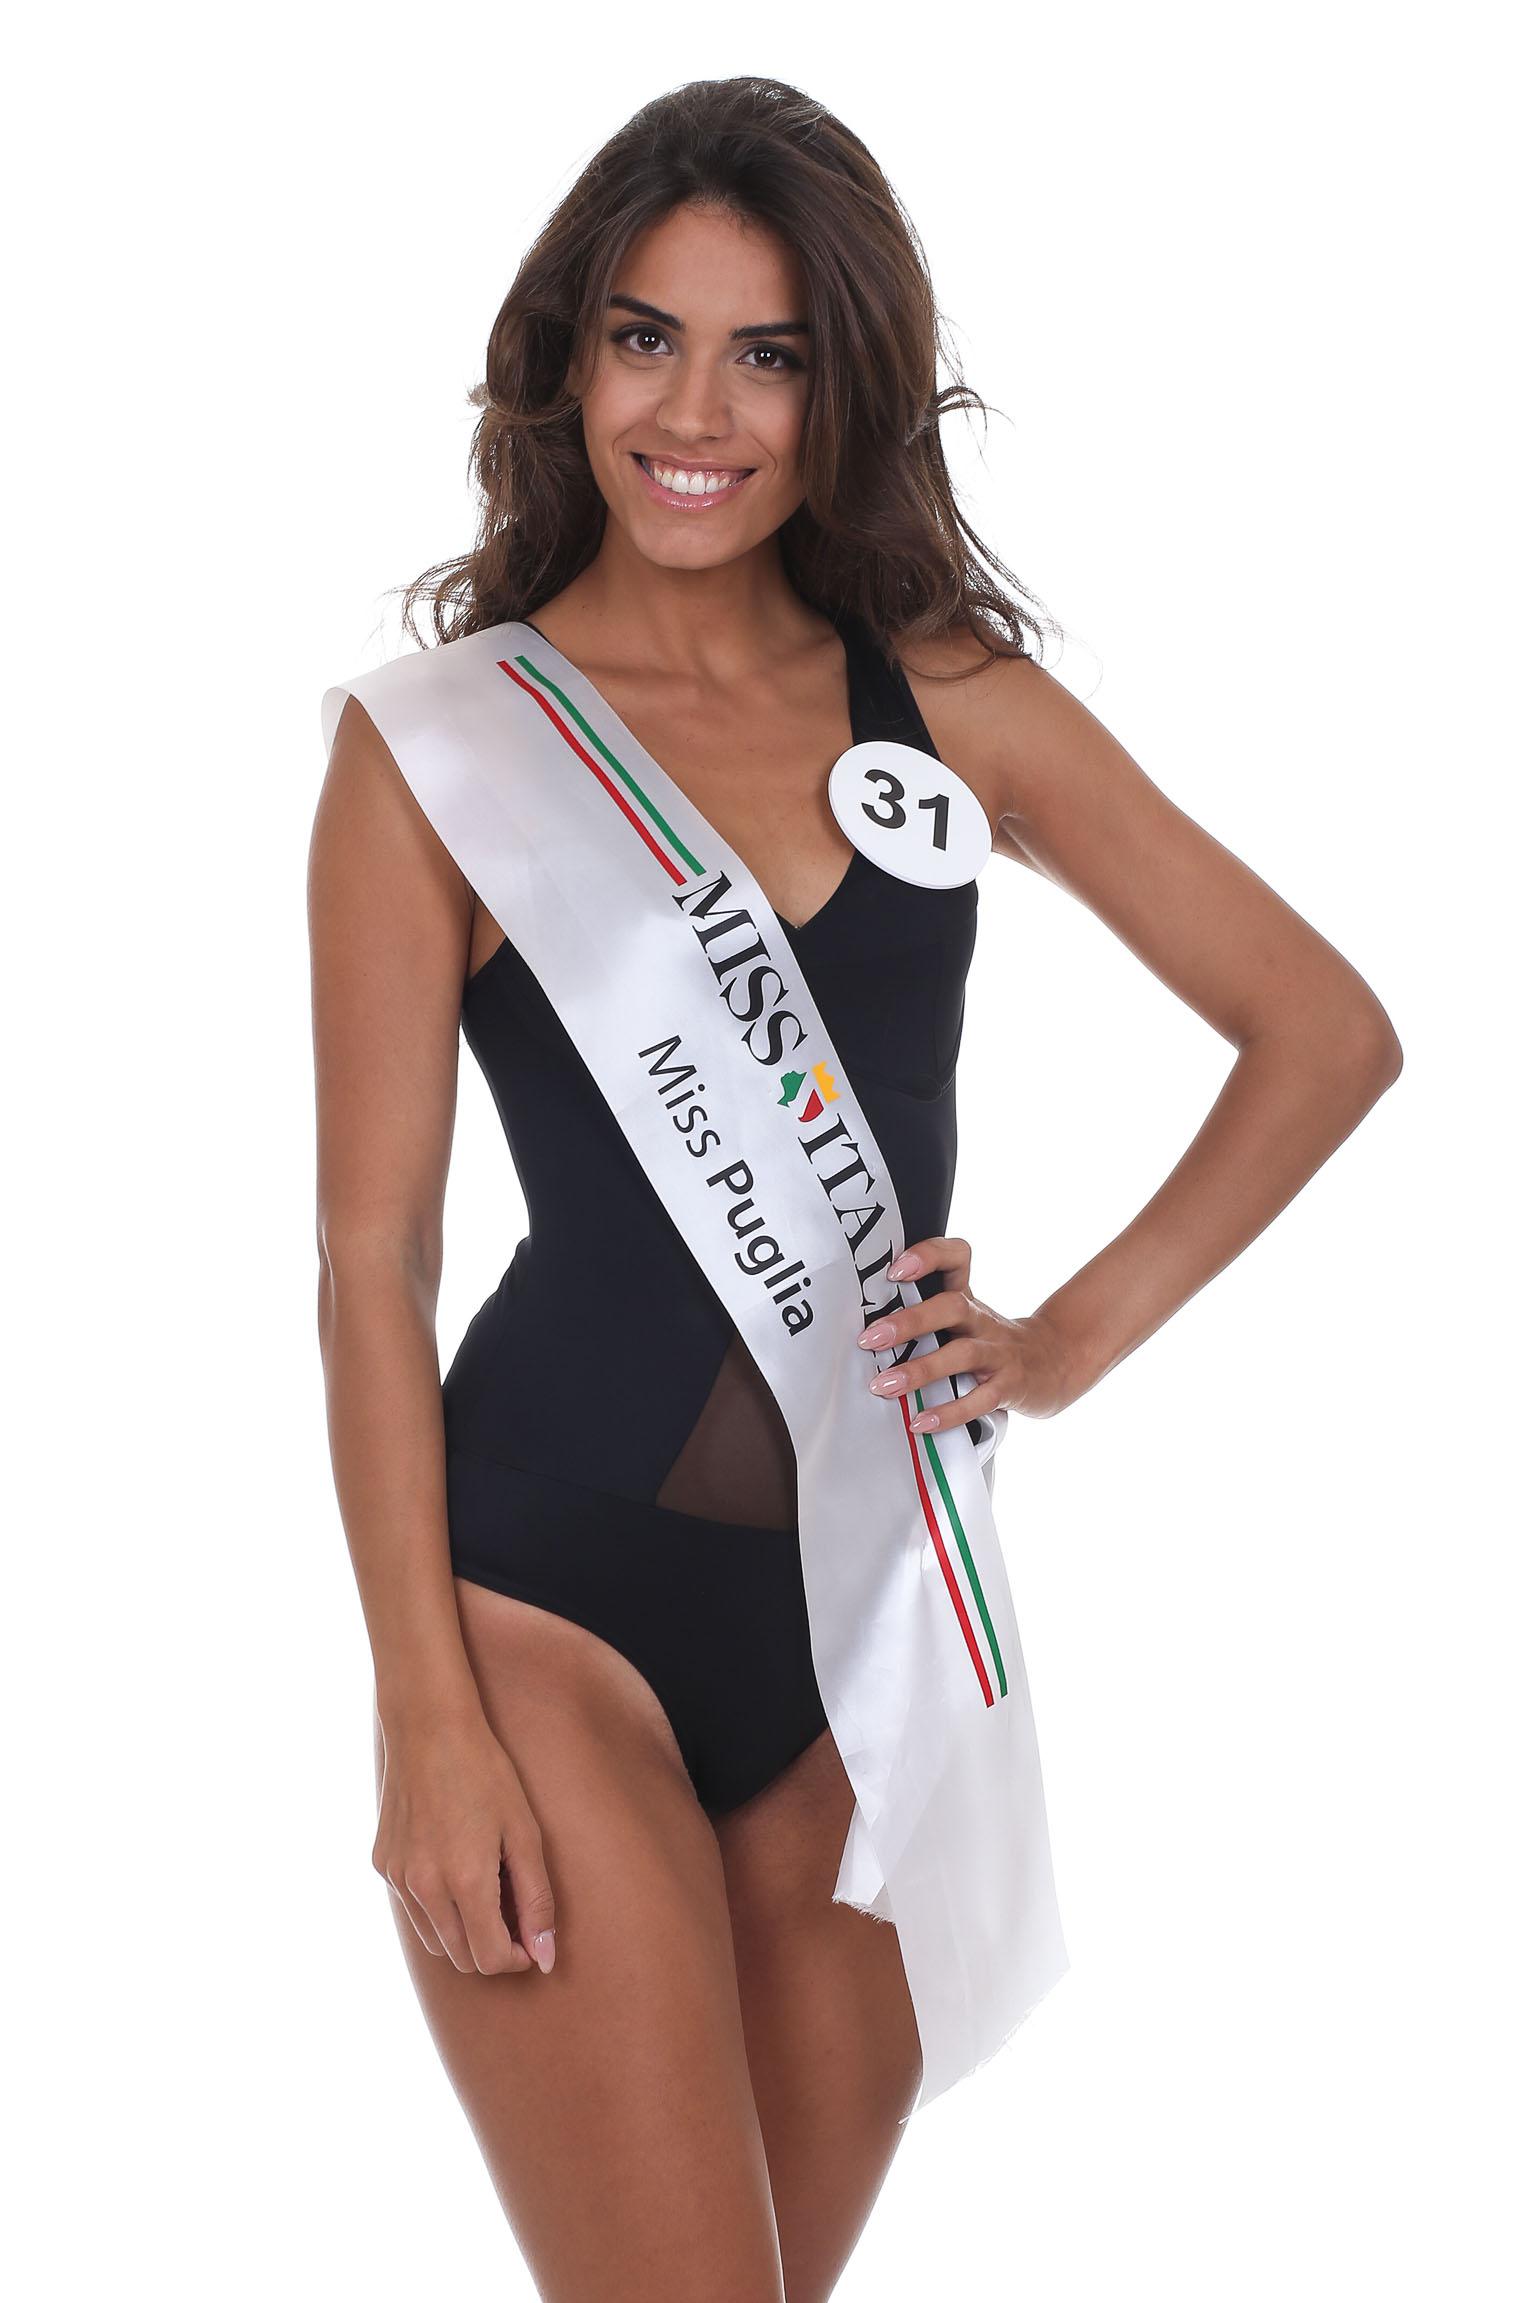 31. Miss Puglia